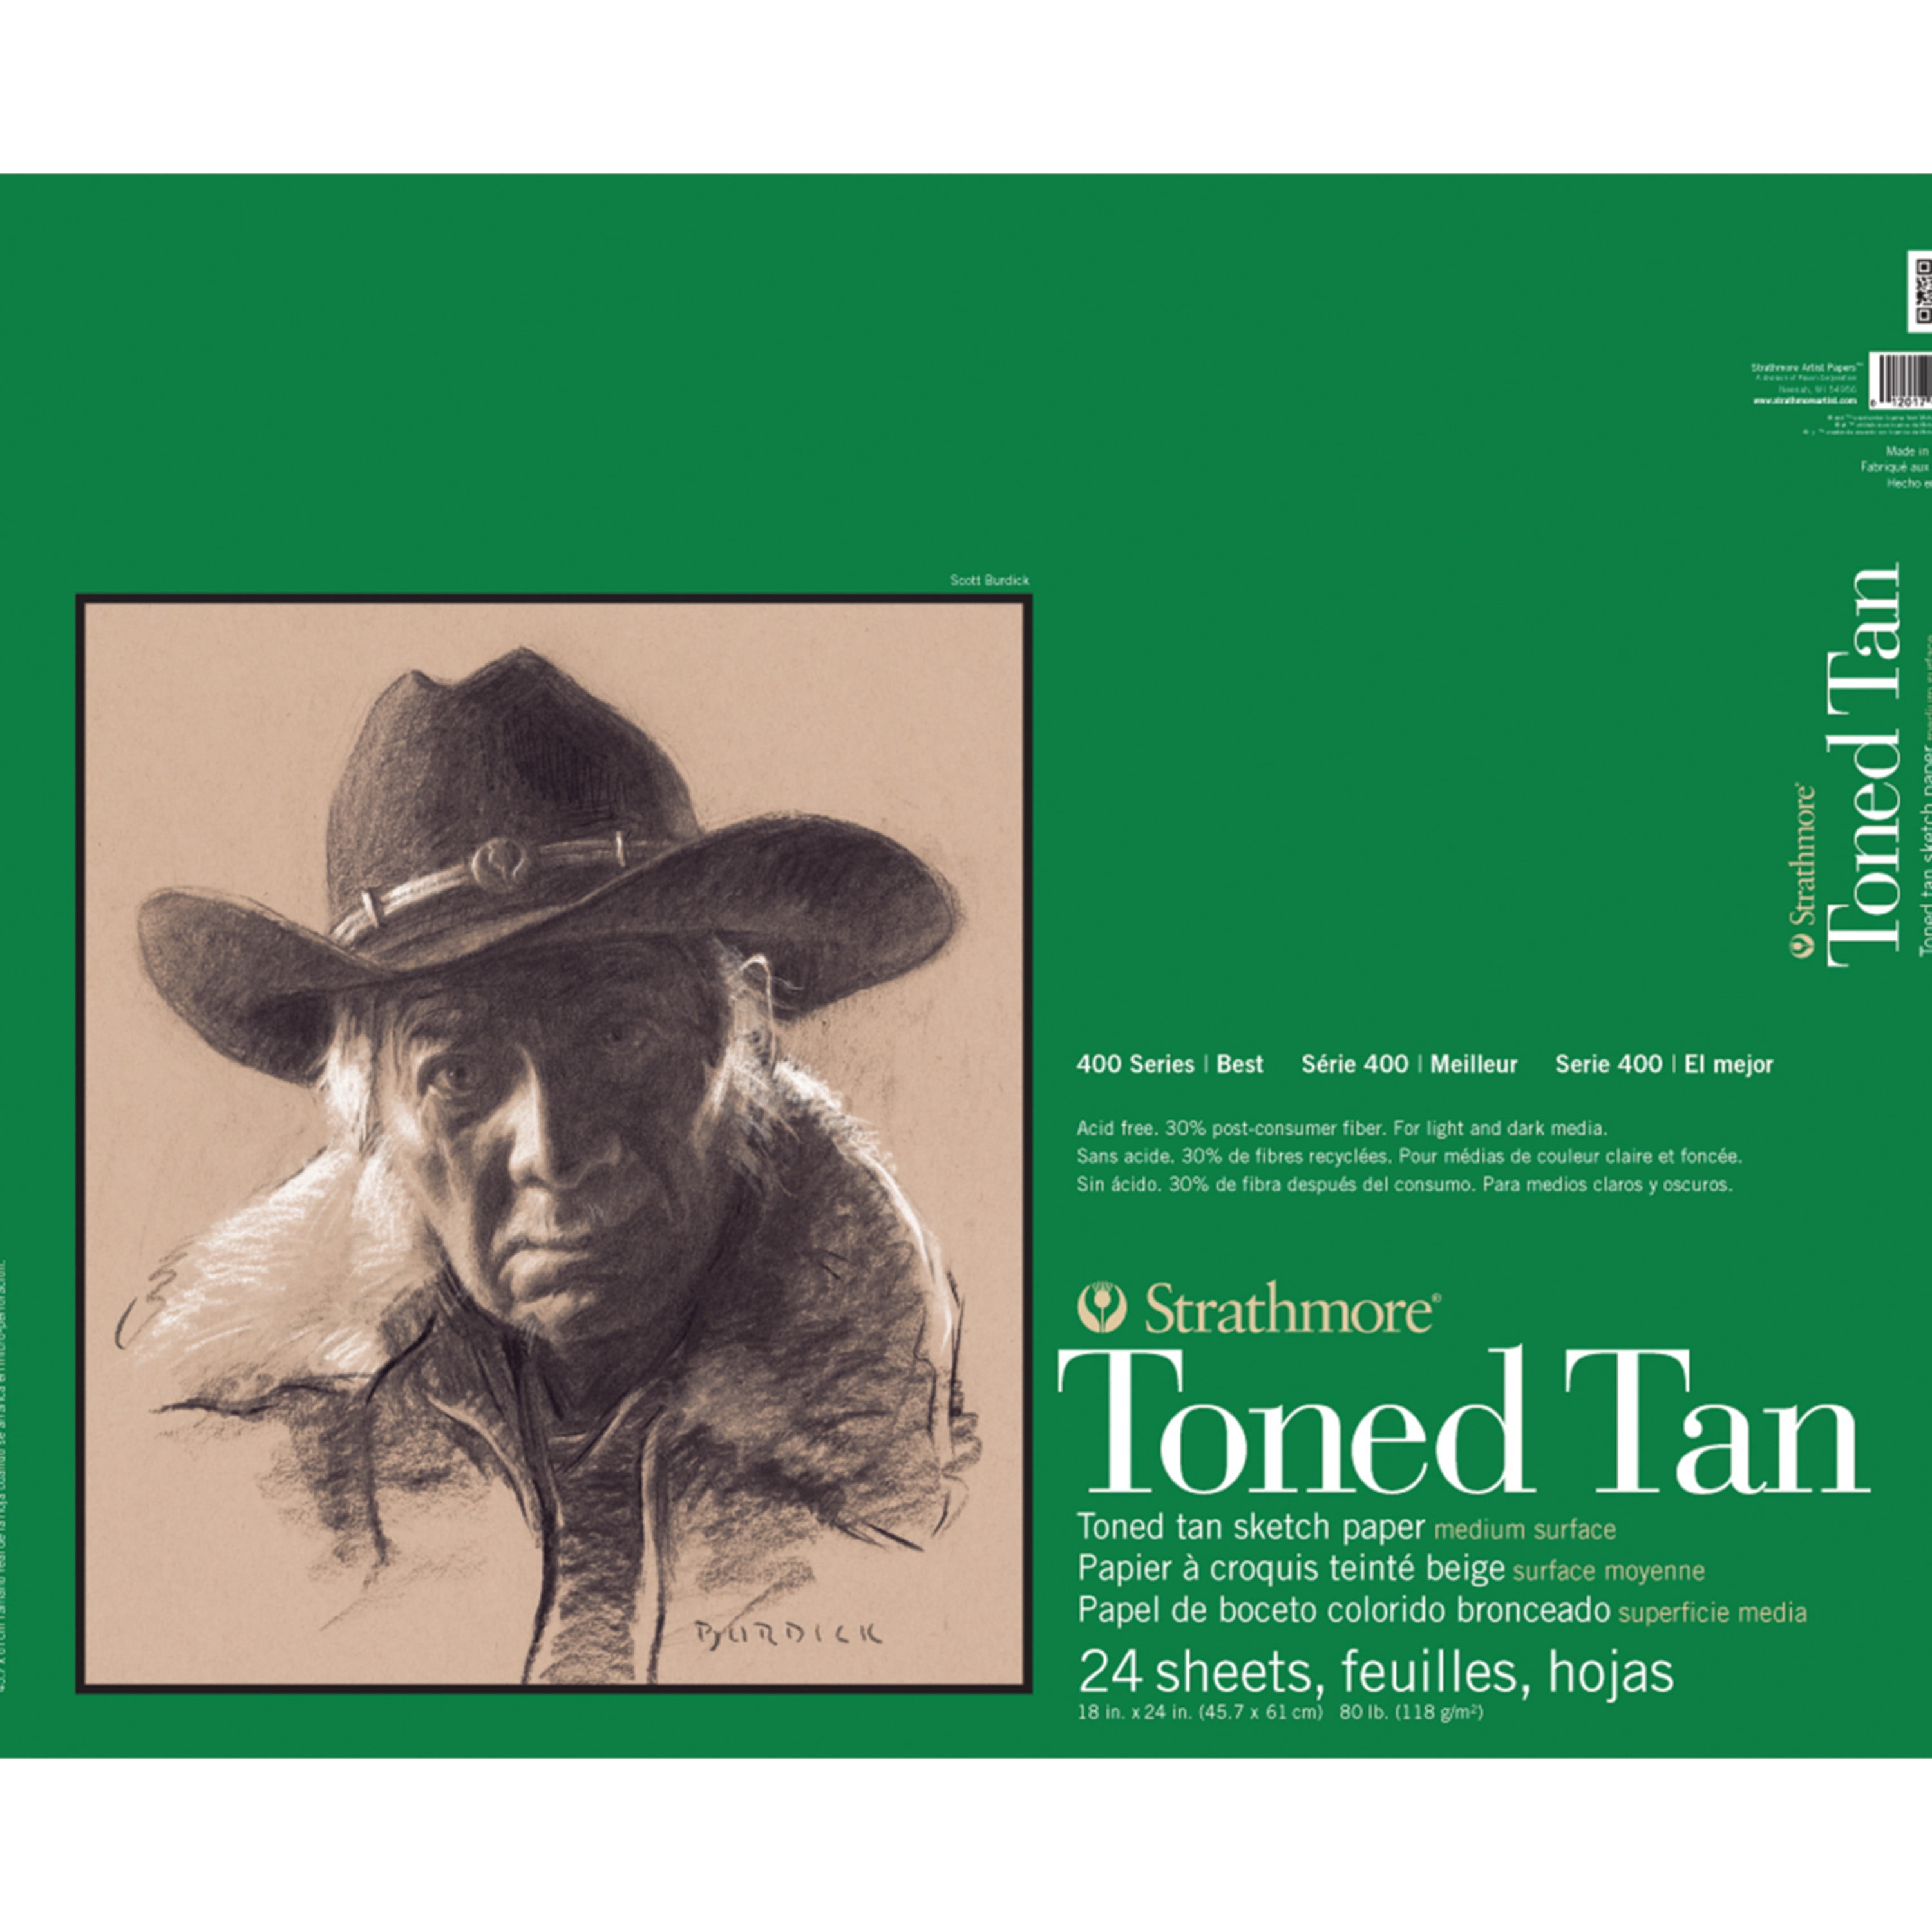 Eddie fan art. Tools i use: Strathmore Toned Tan sketchbook 5.5 in